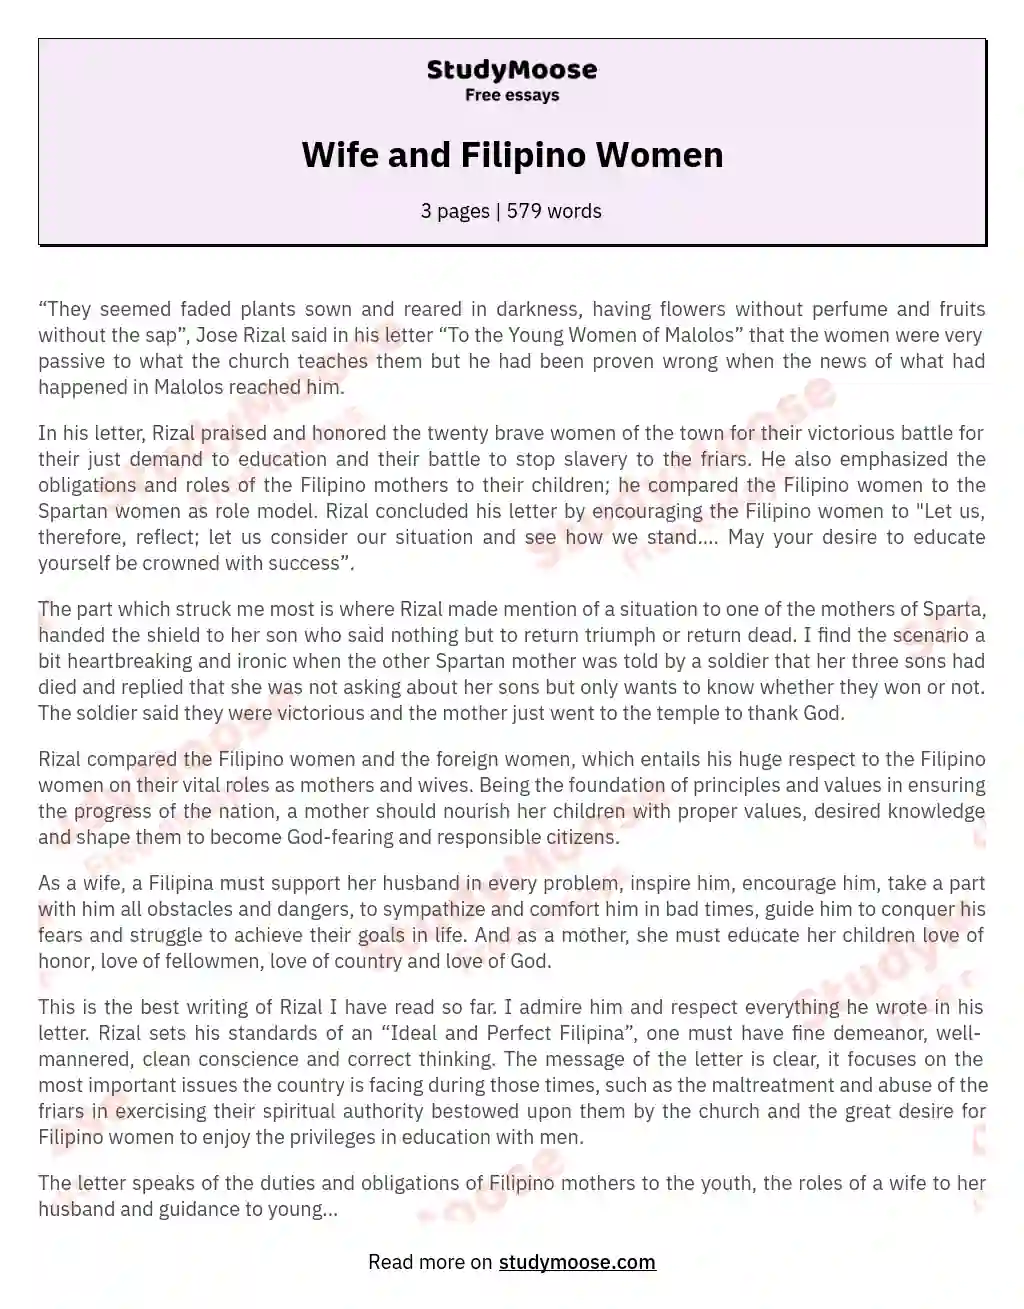 Wife and Filipino Women essay